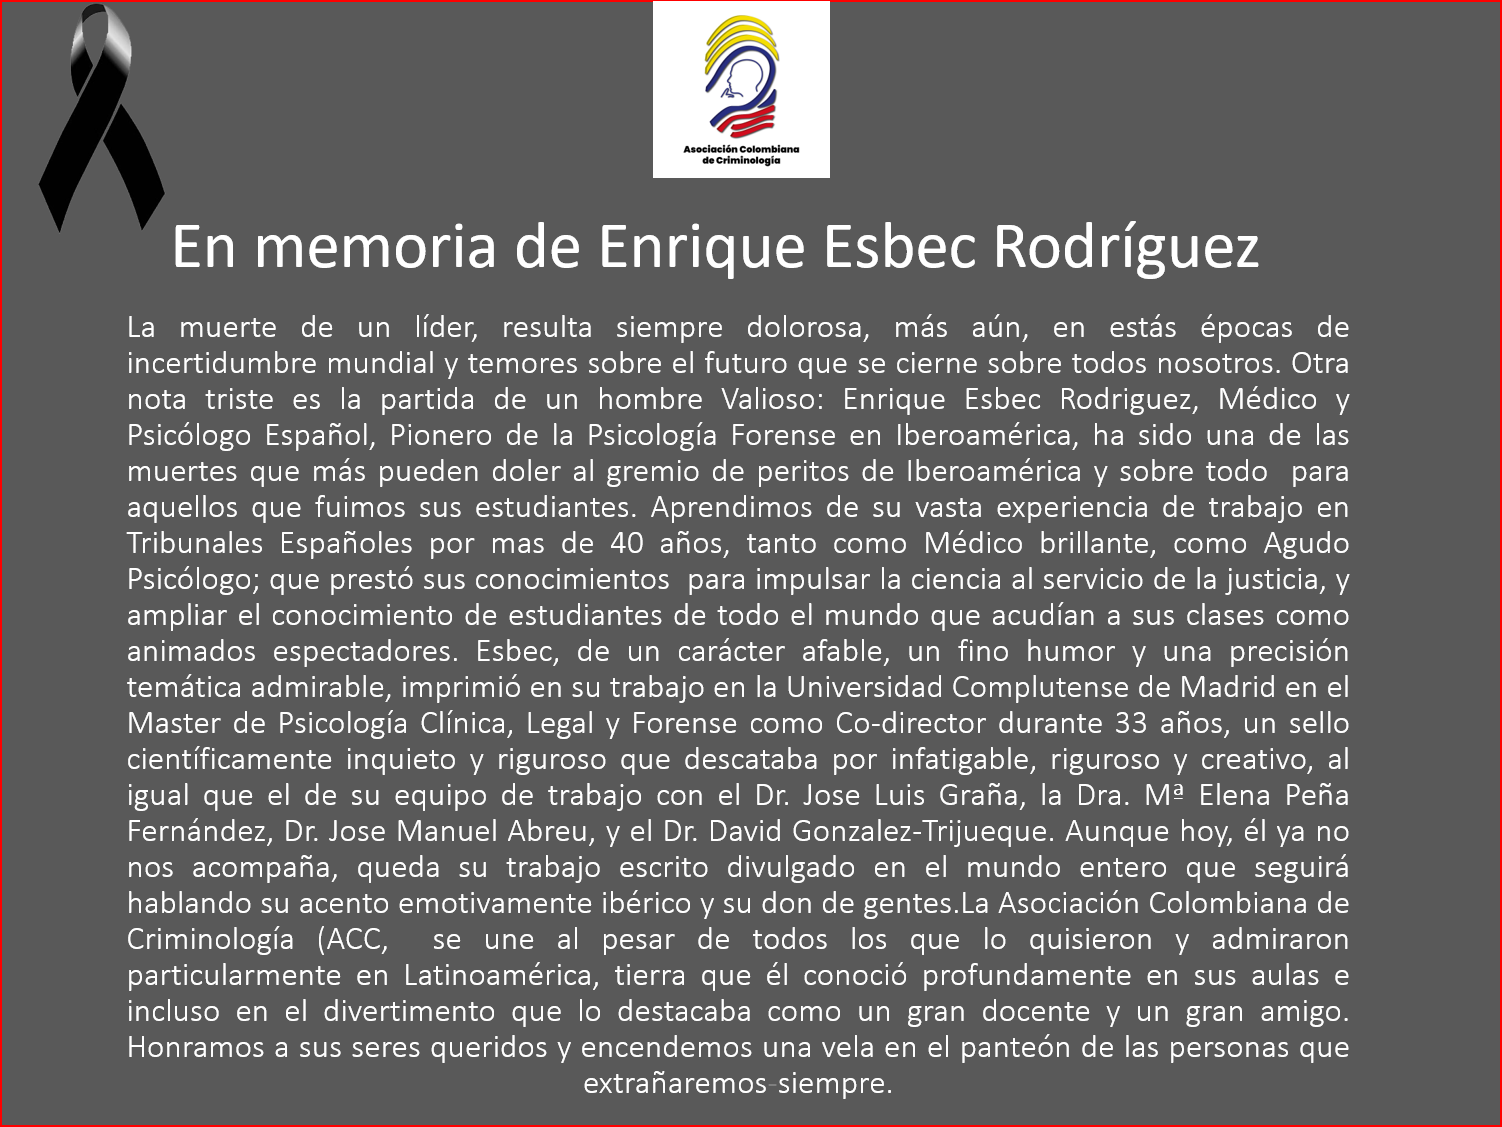 En memoria de Esbec II